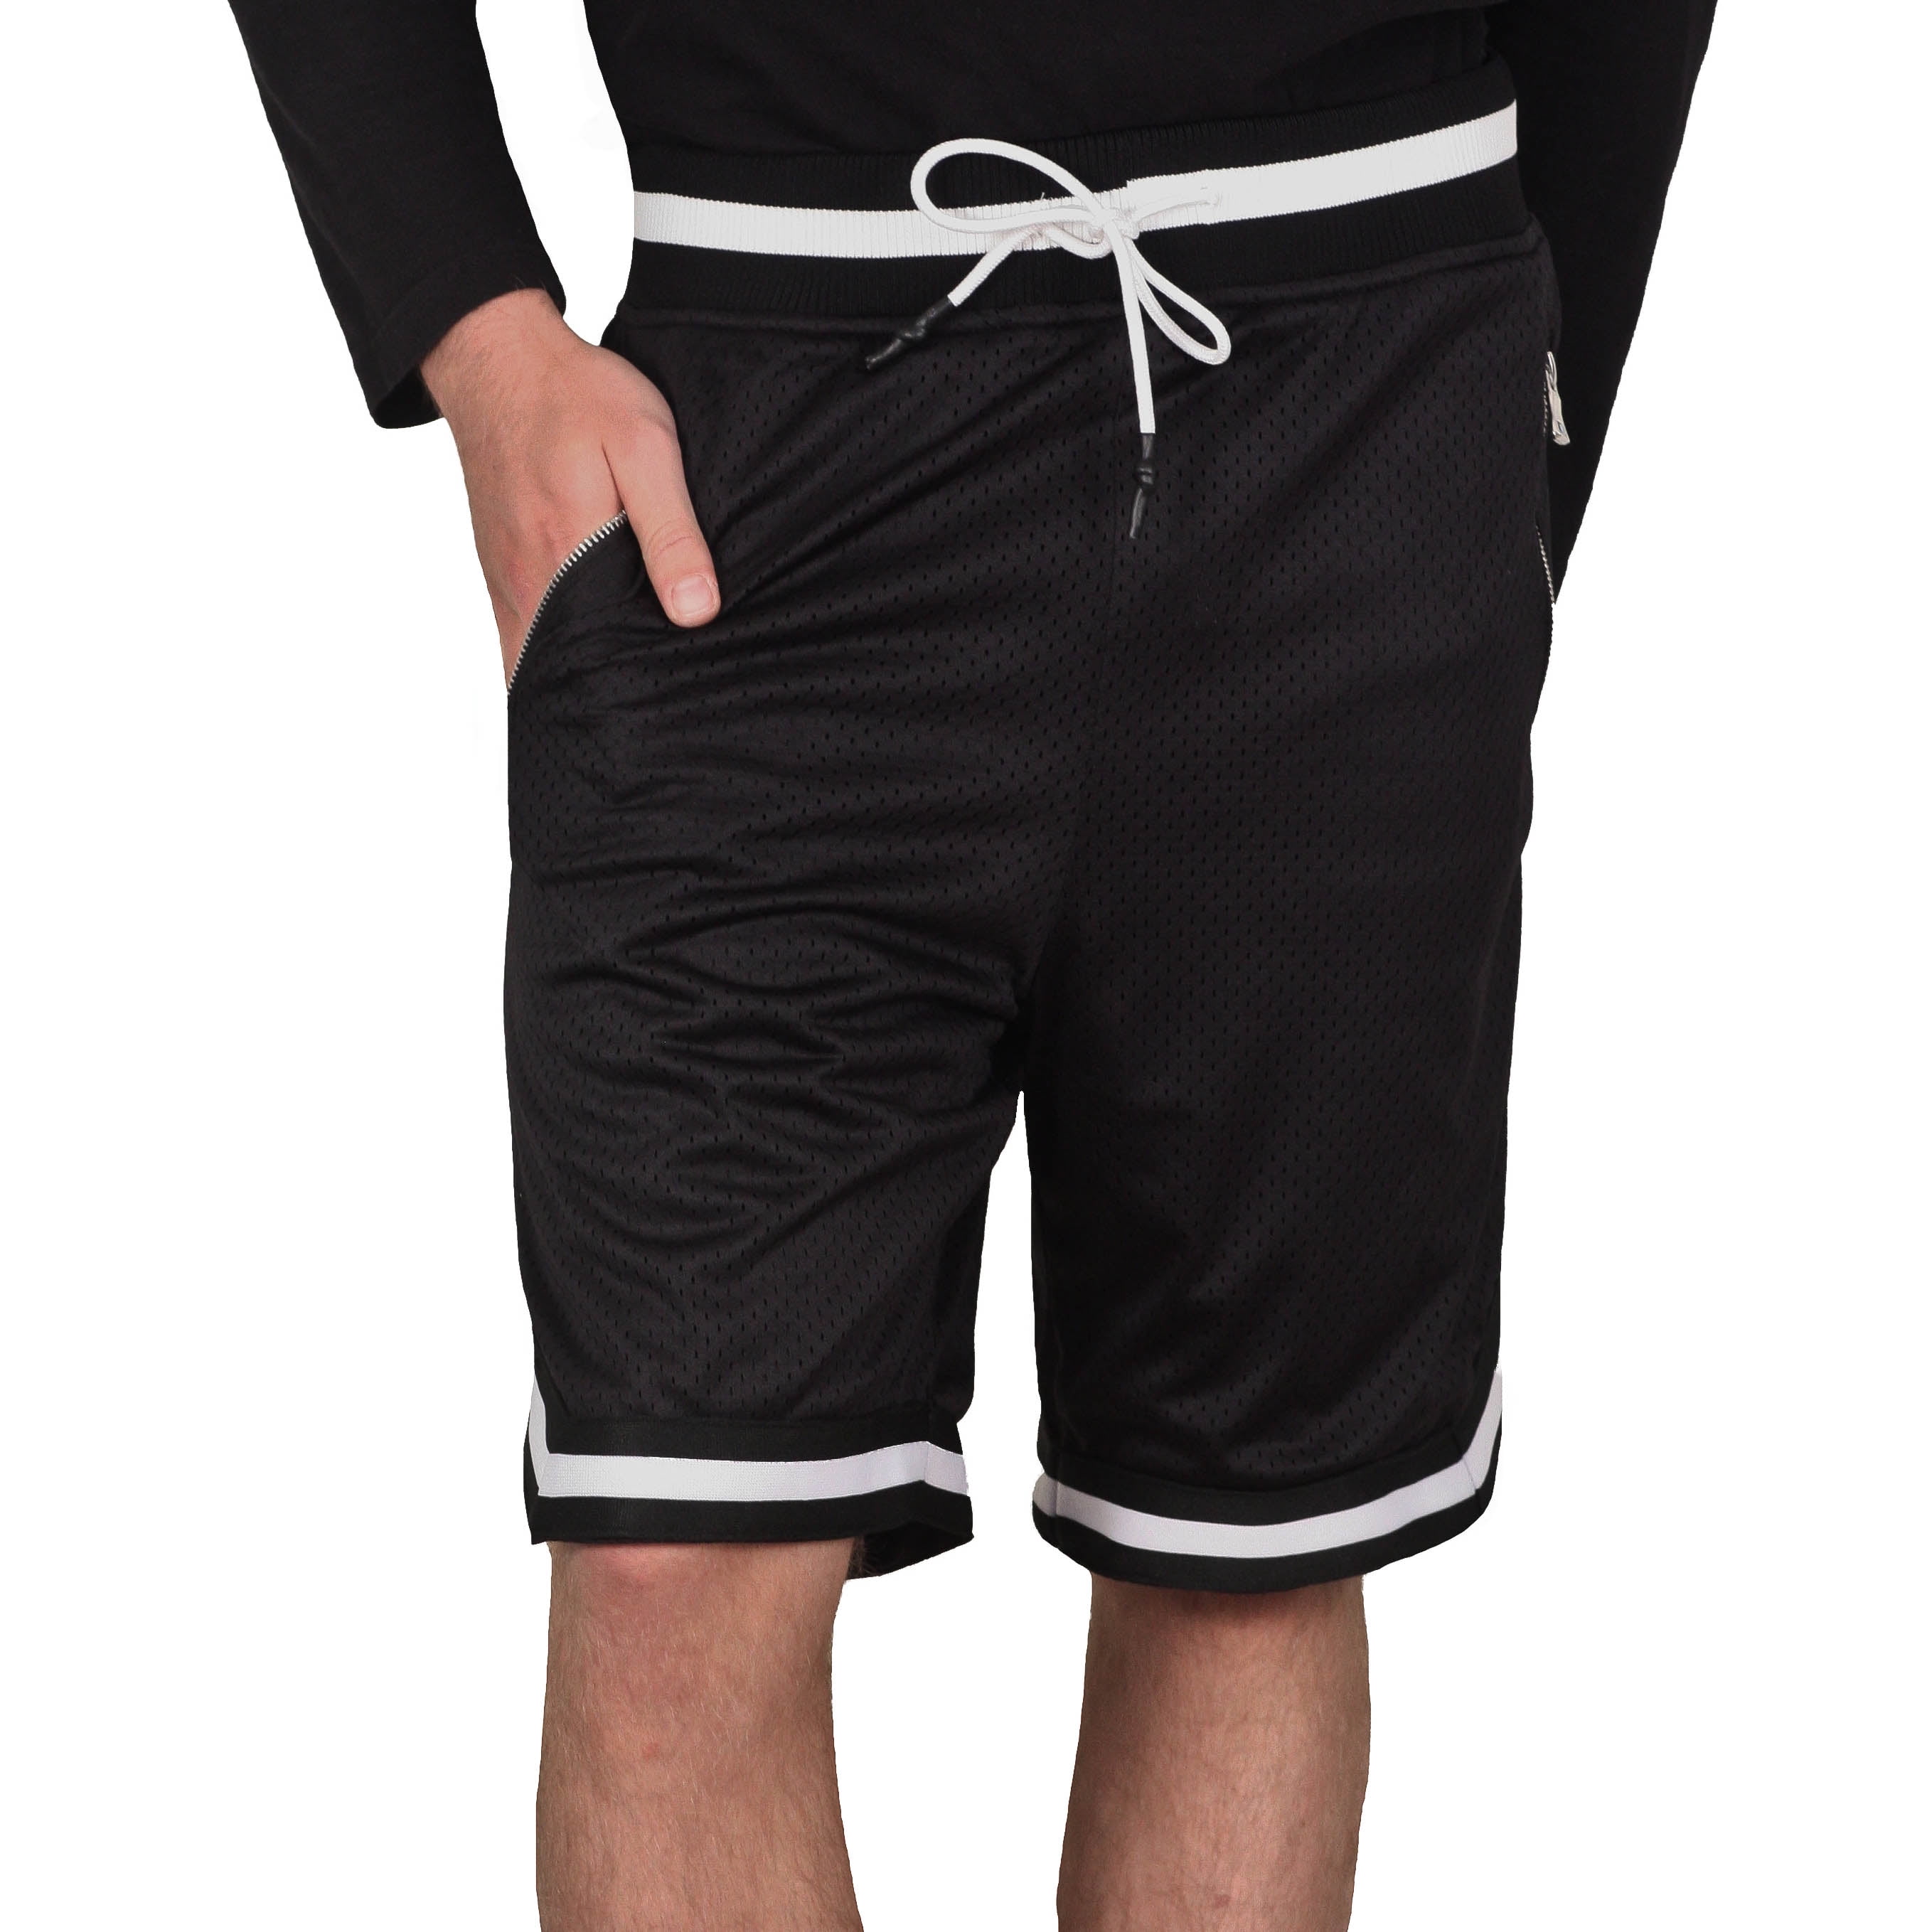 jordan shorts with zipper pockets